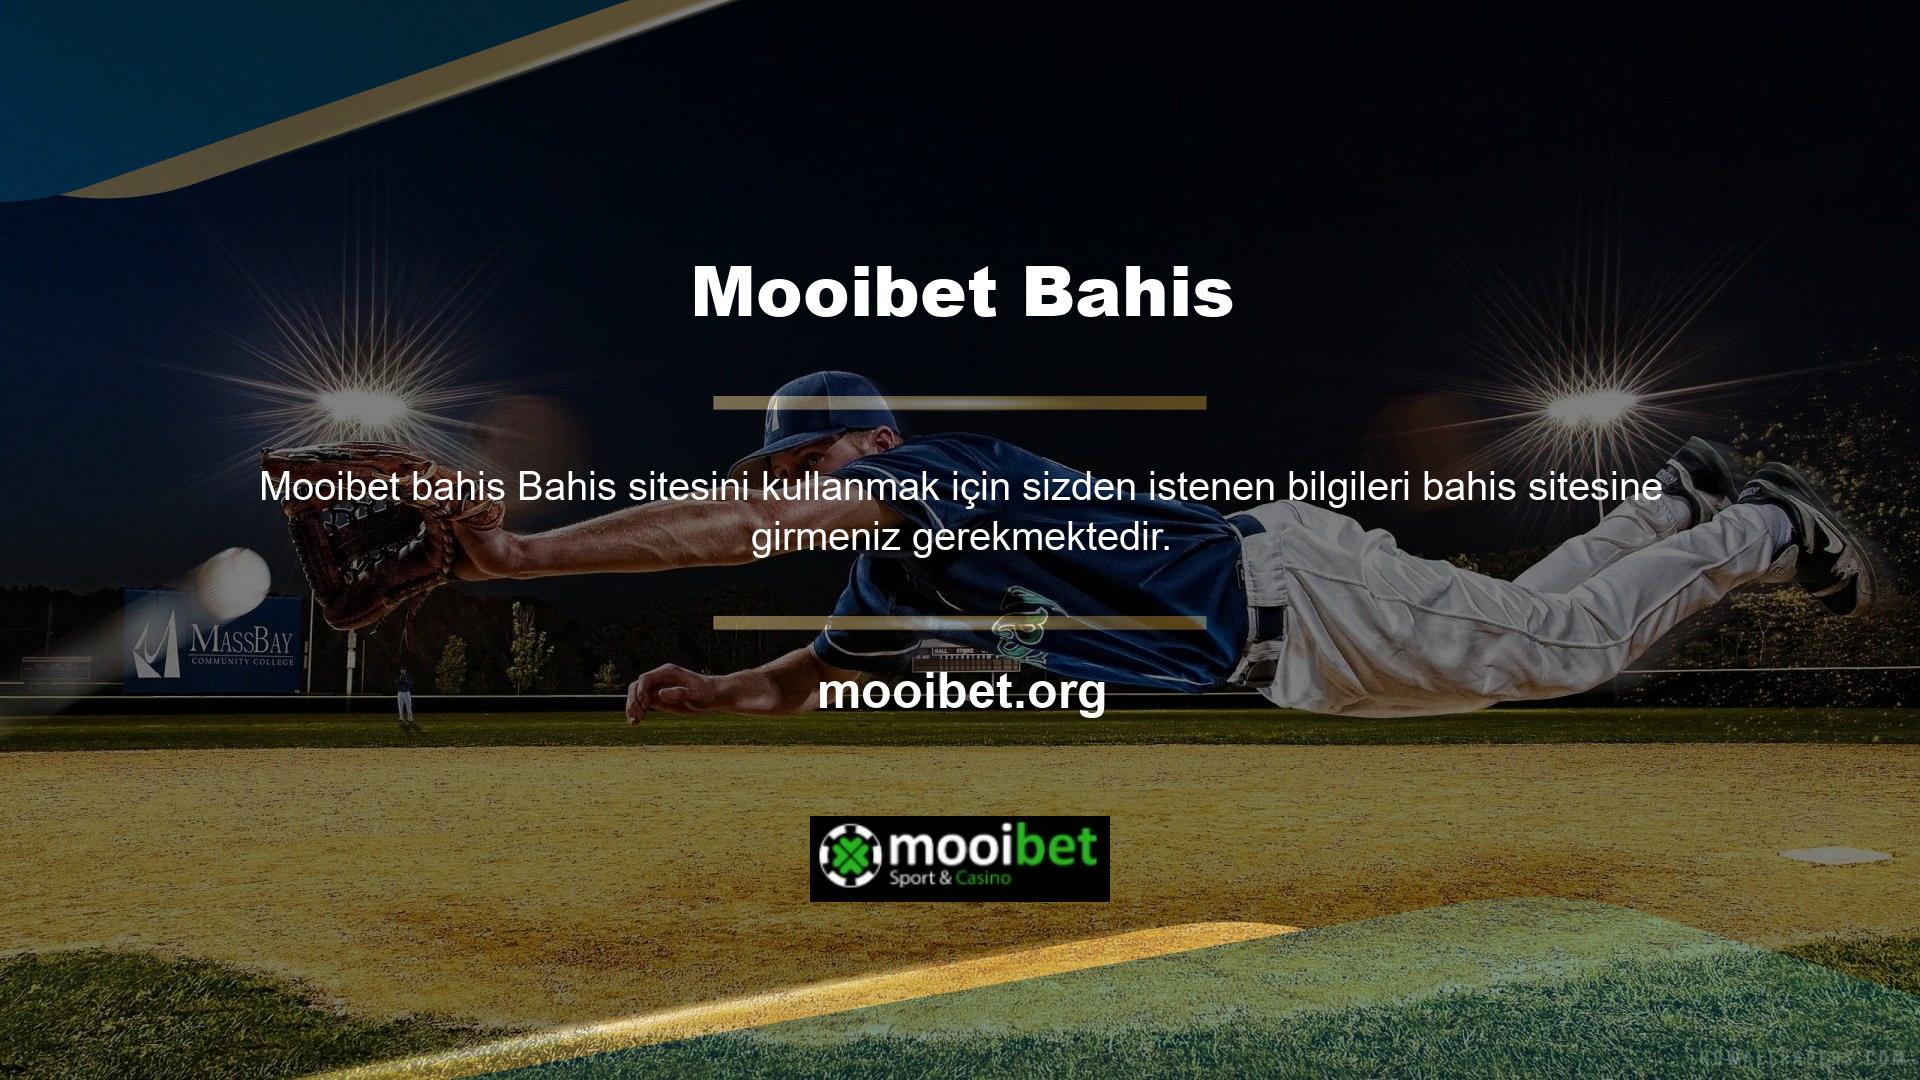 Mooibet bahis